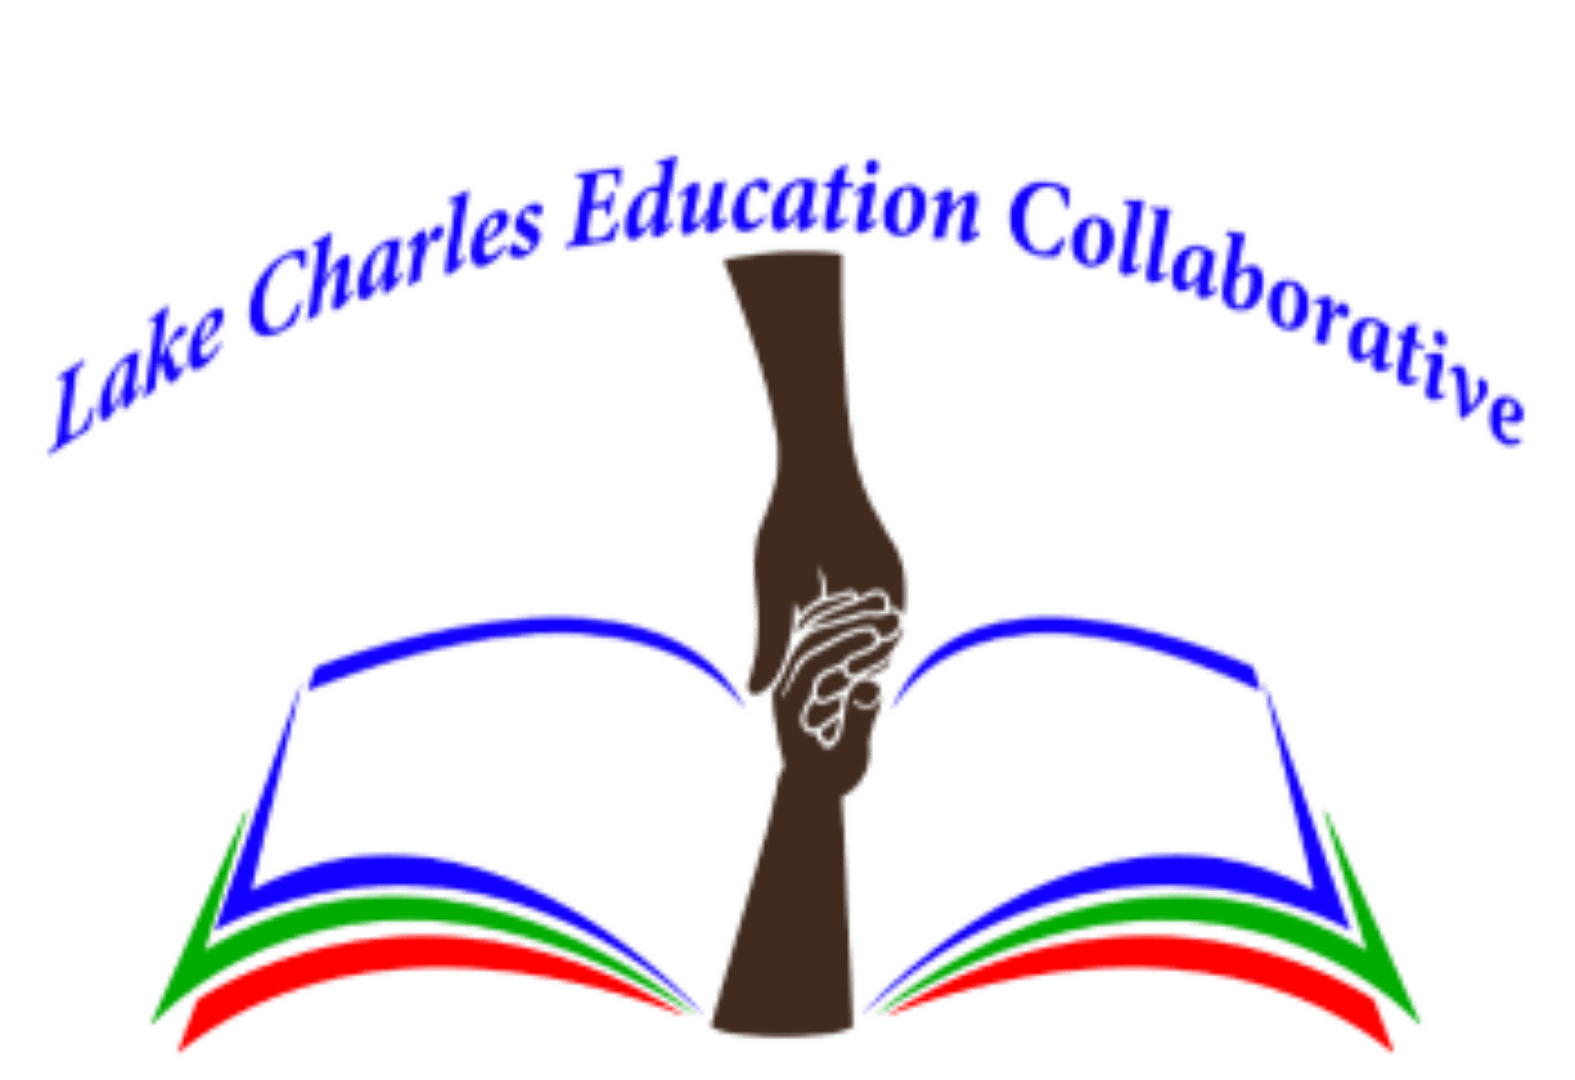 lake charles educational collaboartion